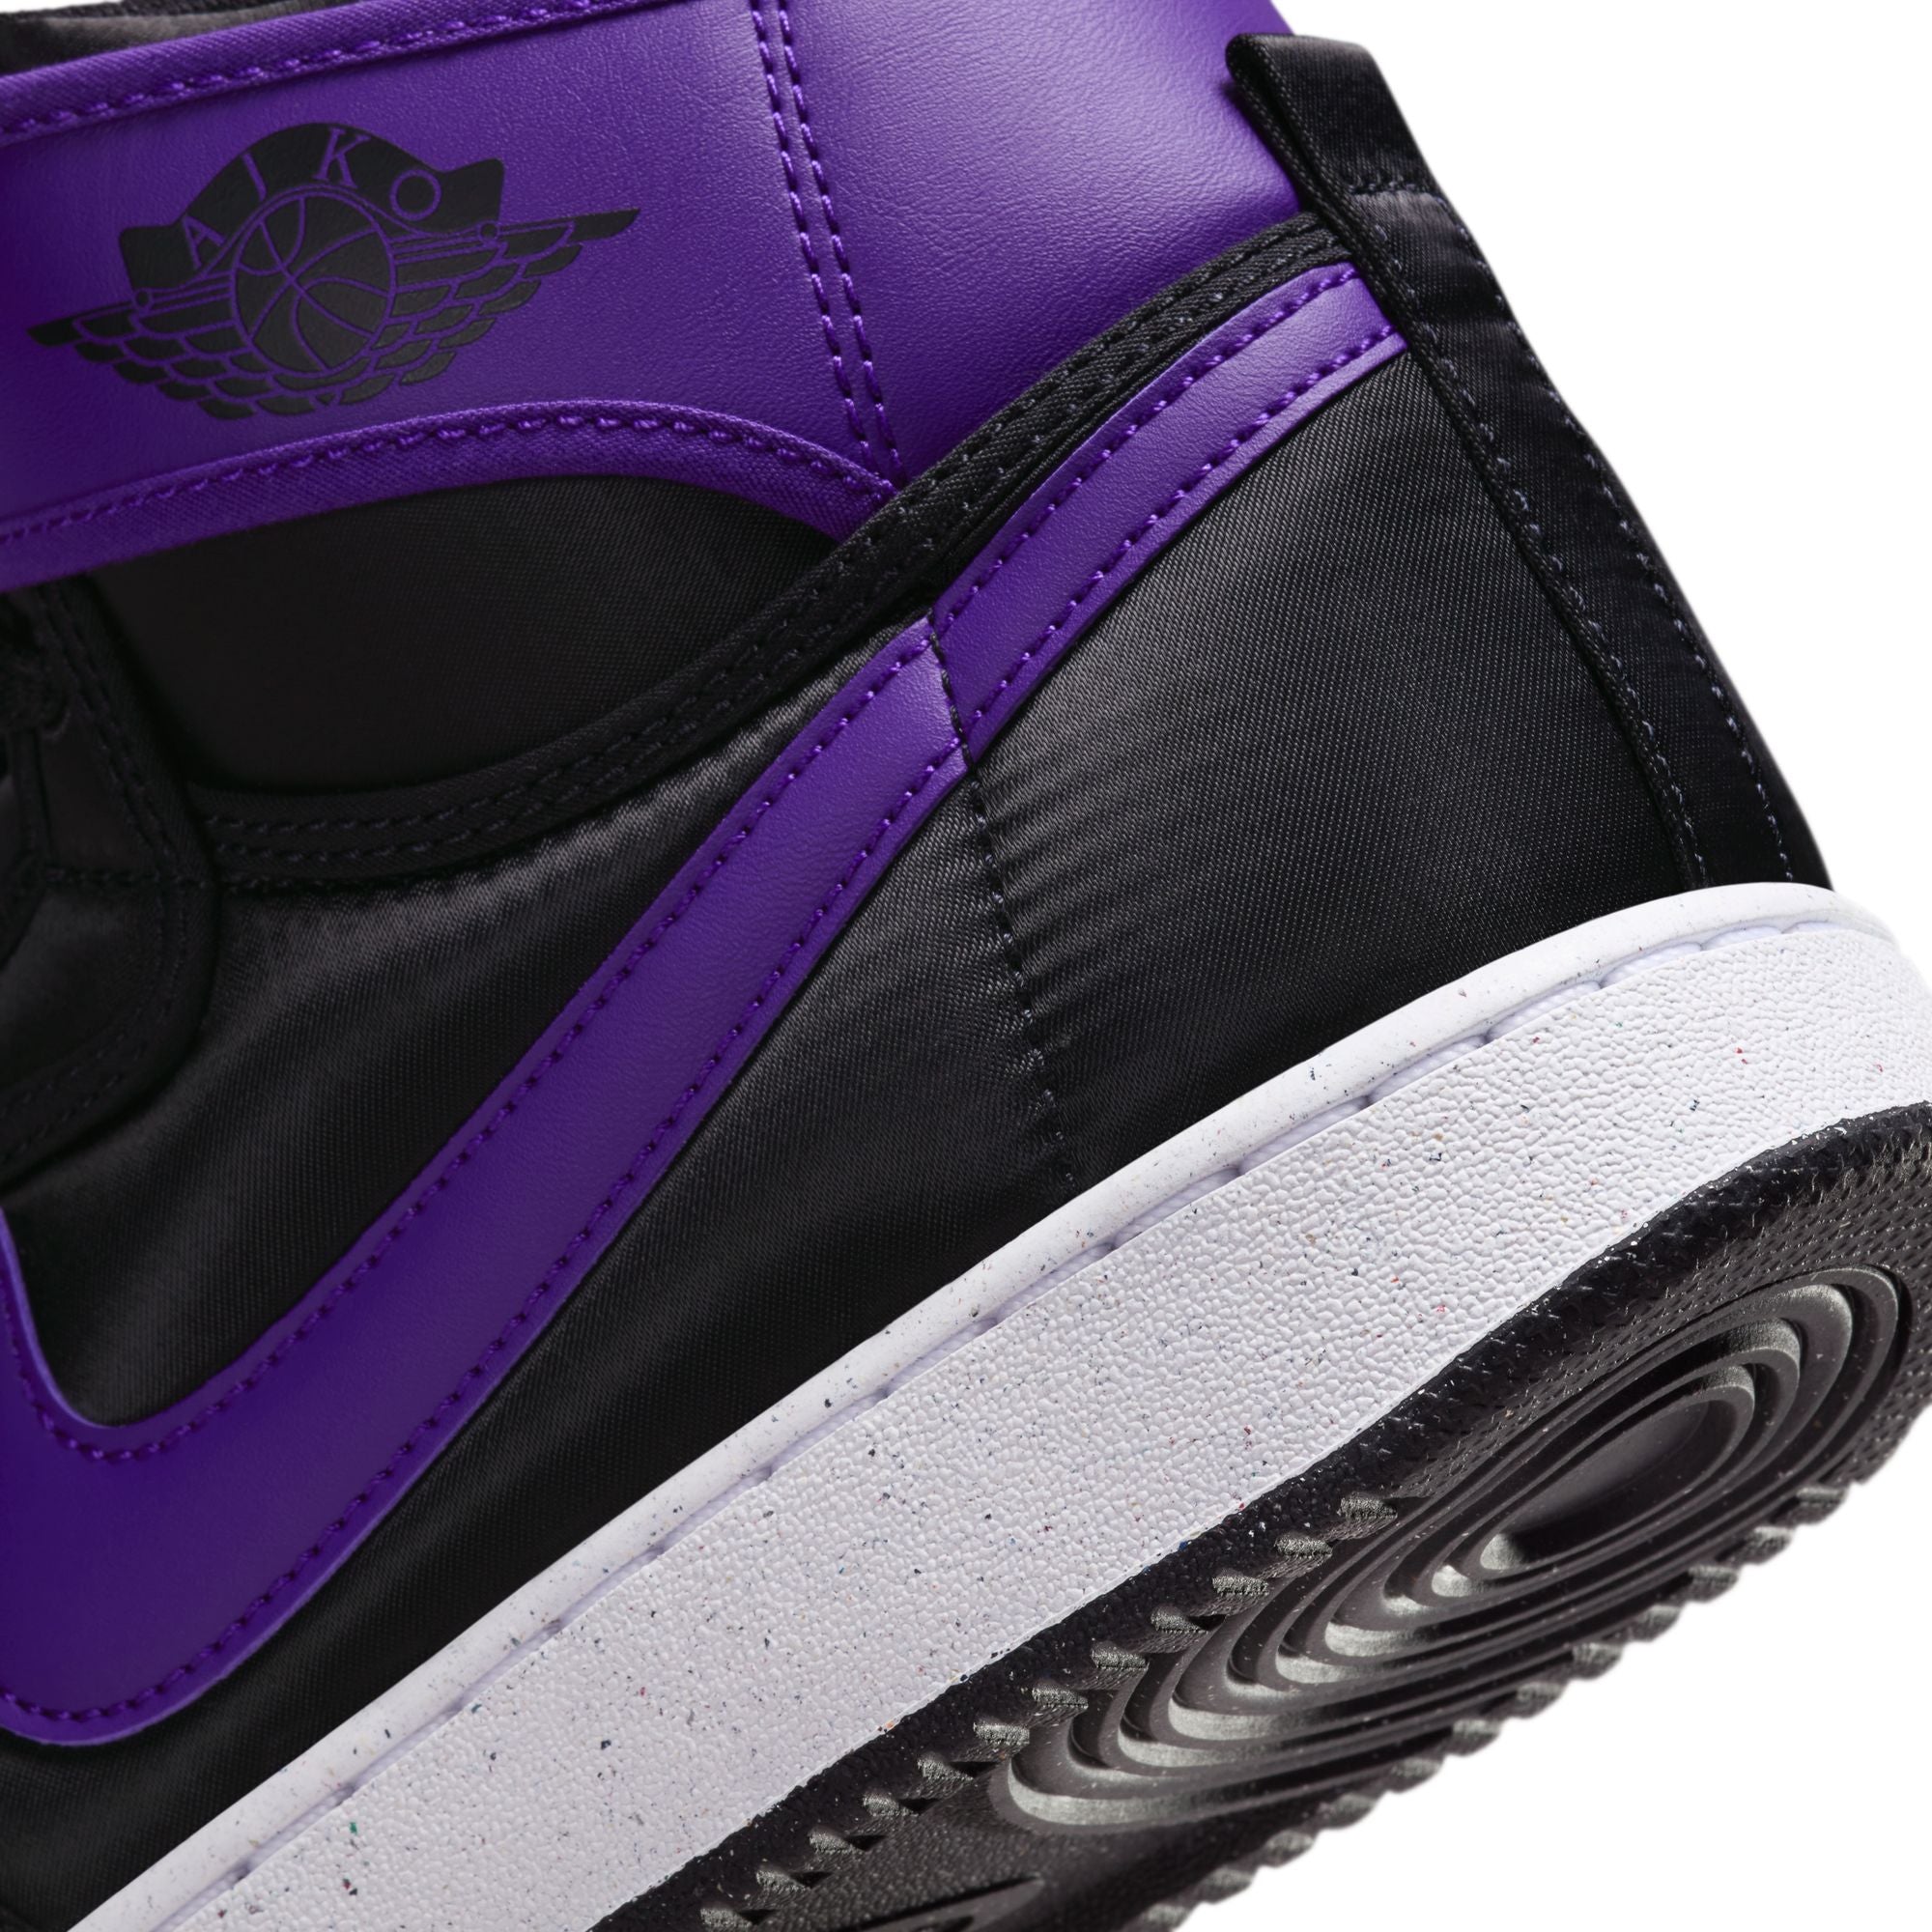 Air Jordan 1 KO 'Black/Purple'